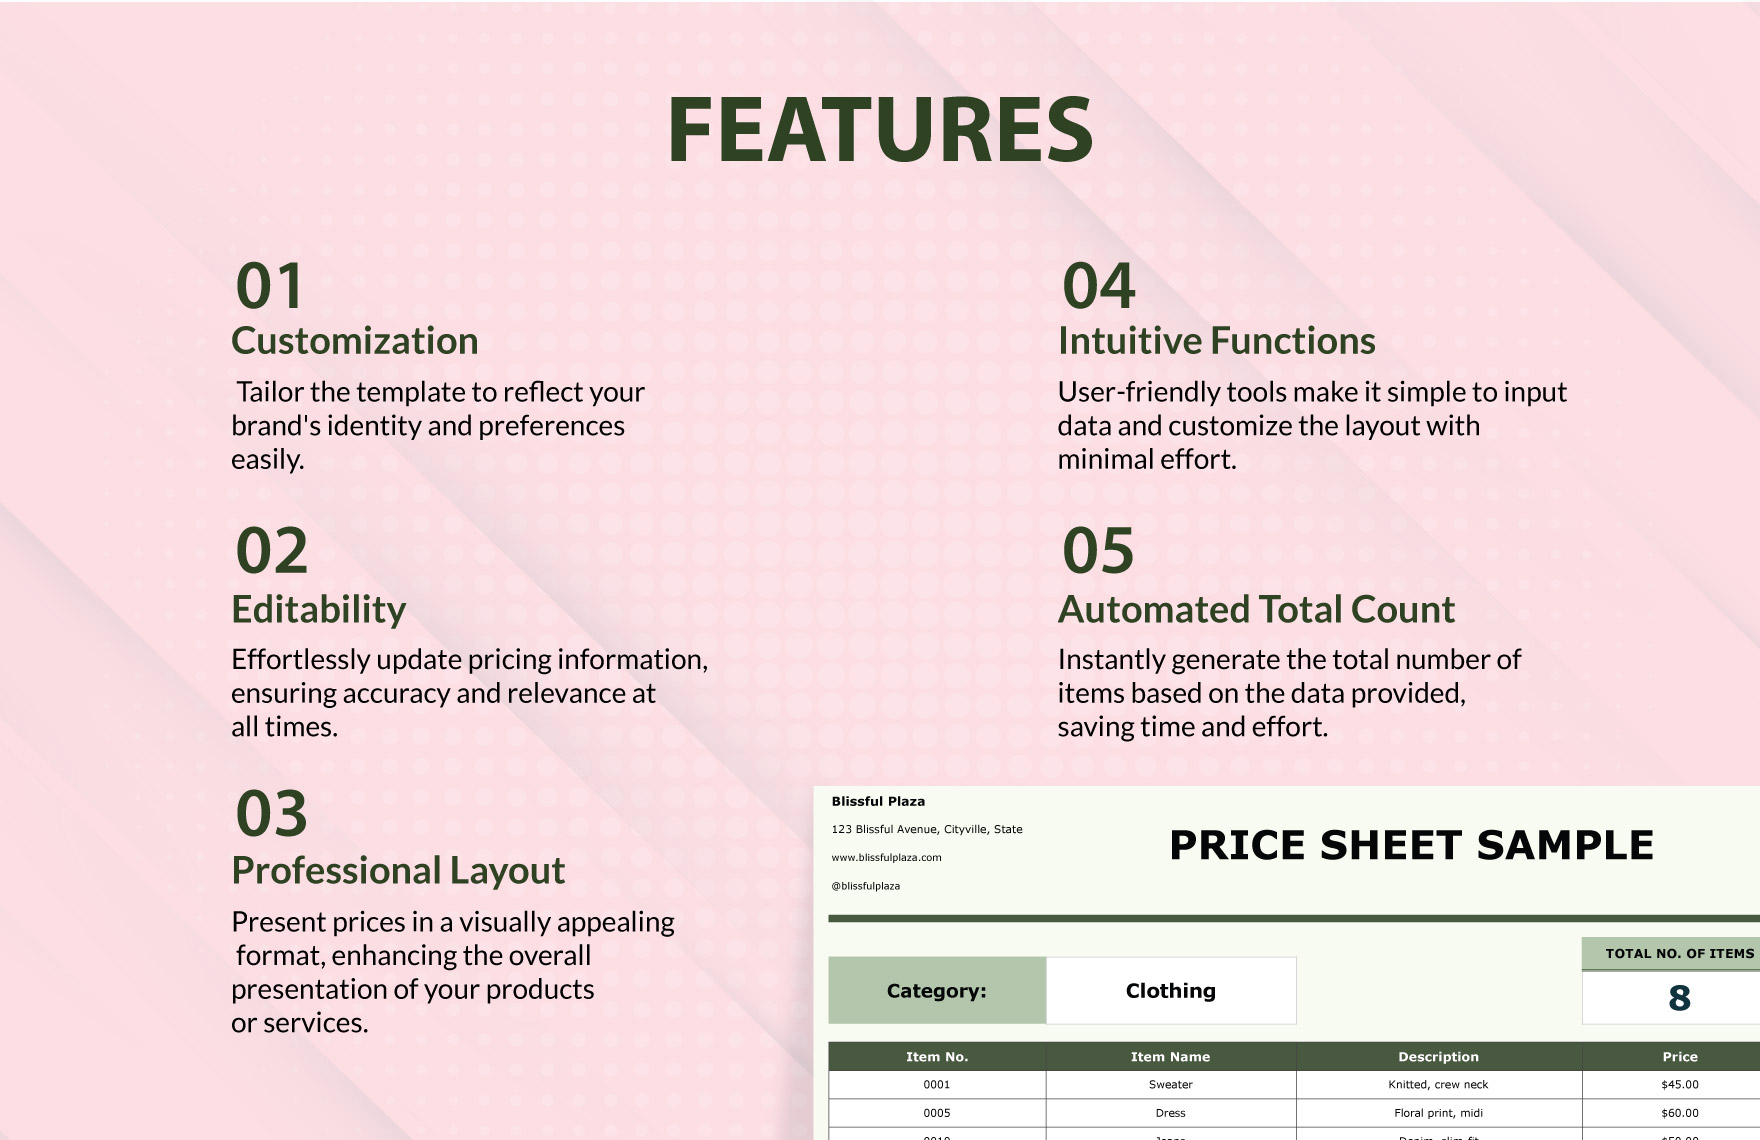 Price Sheet Sample Template